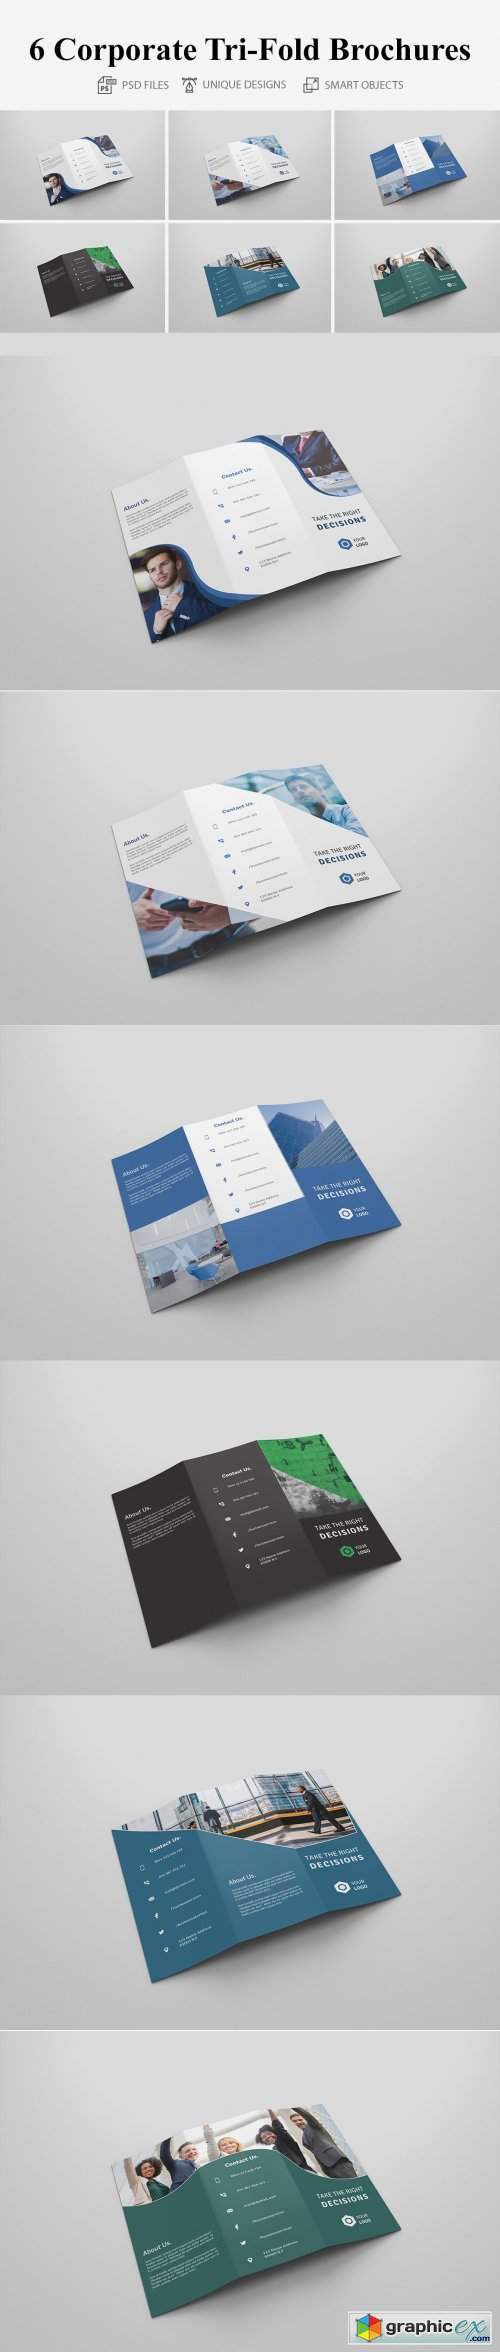 6 Corporate Tri-fold Brochure